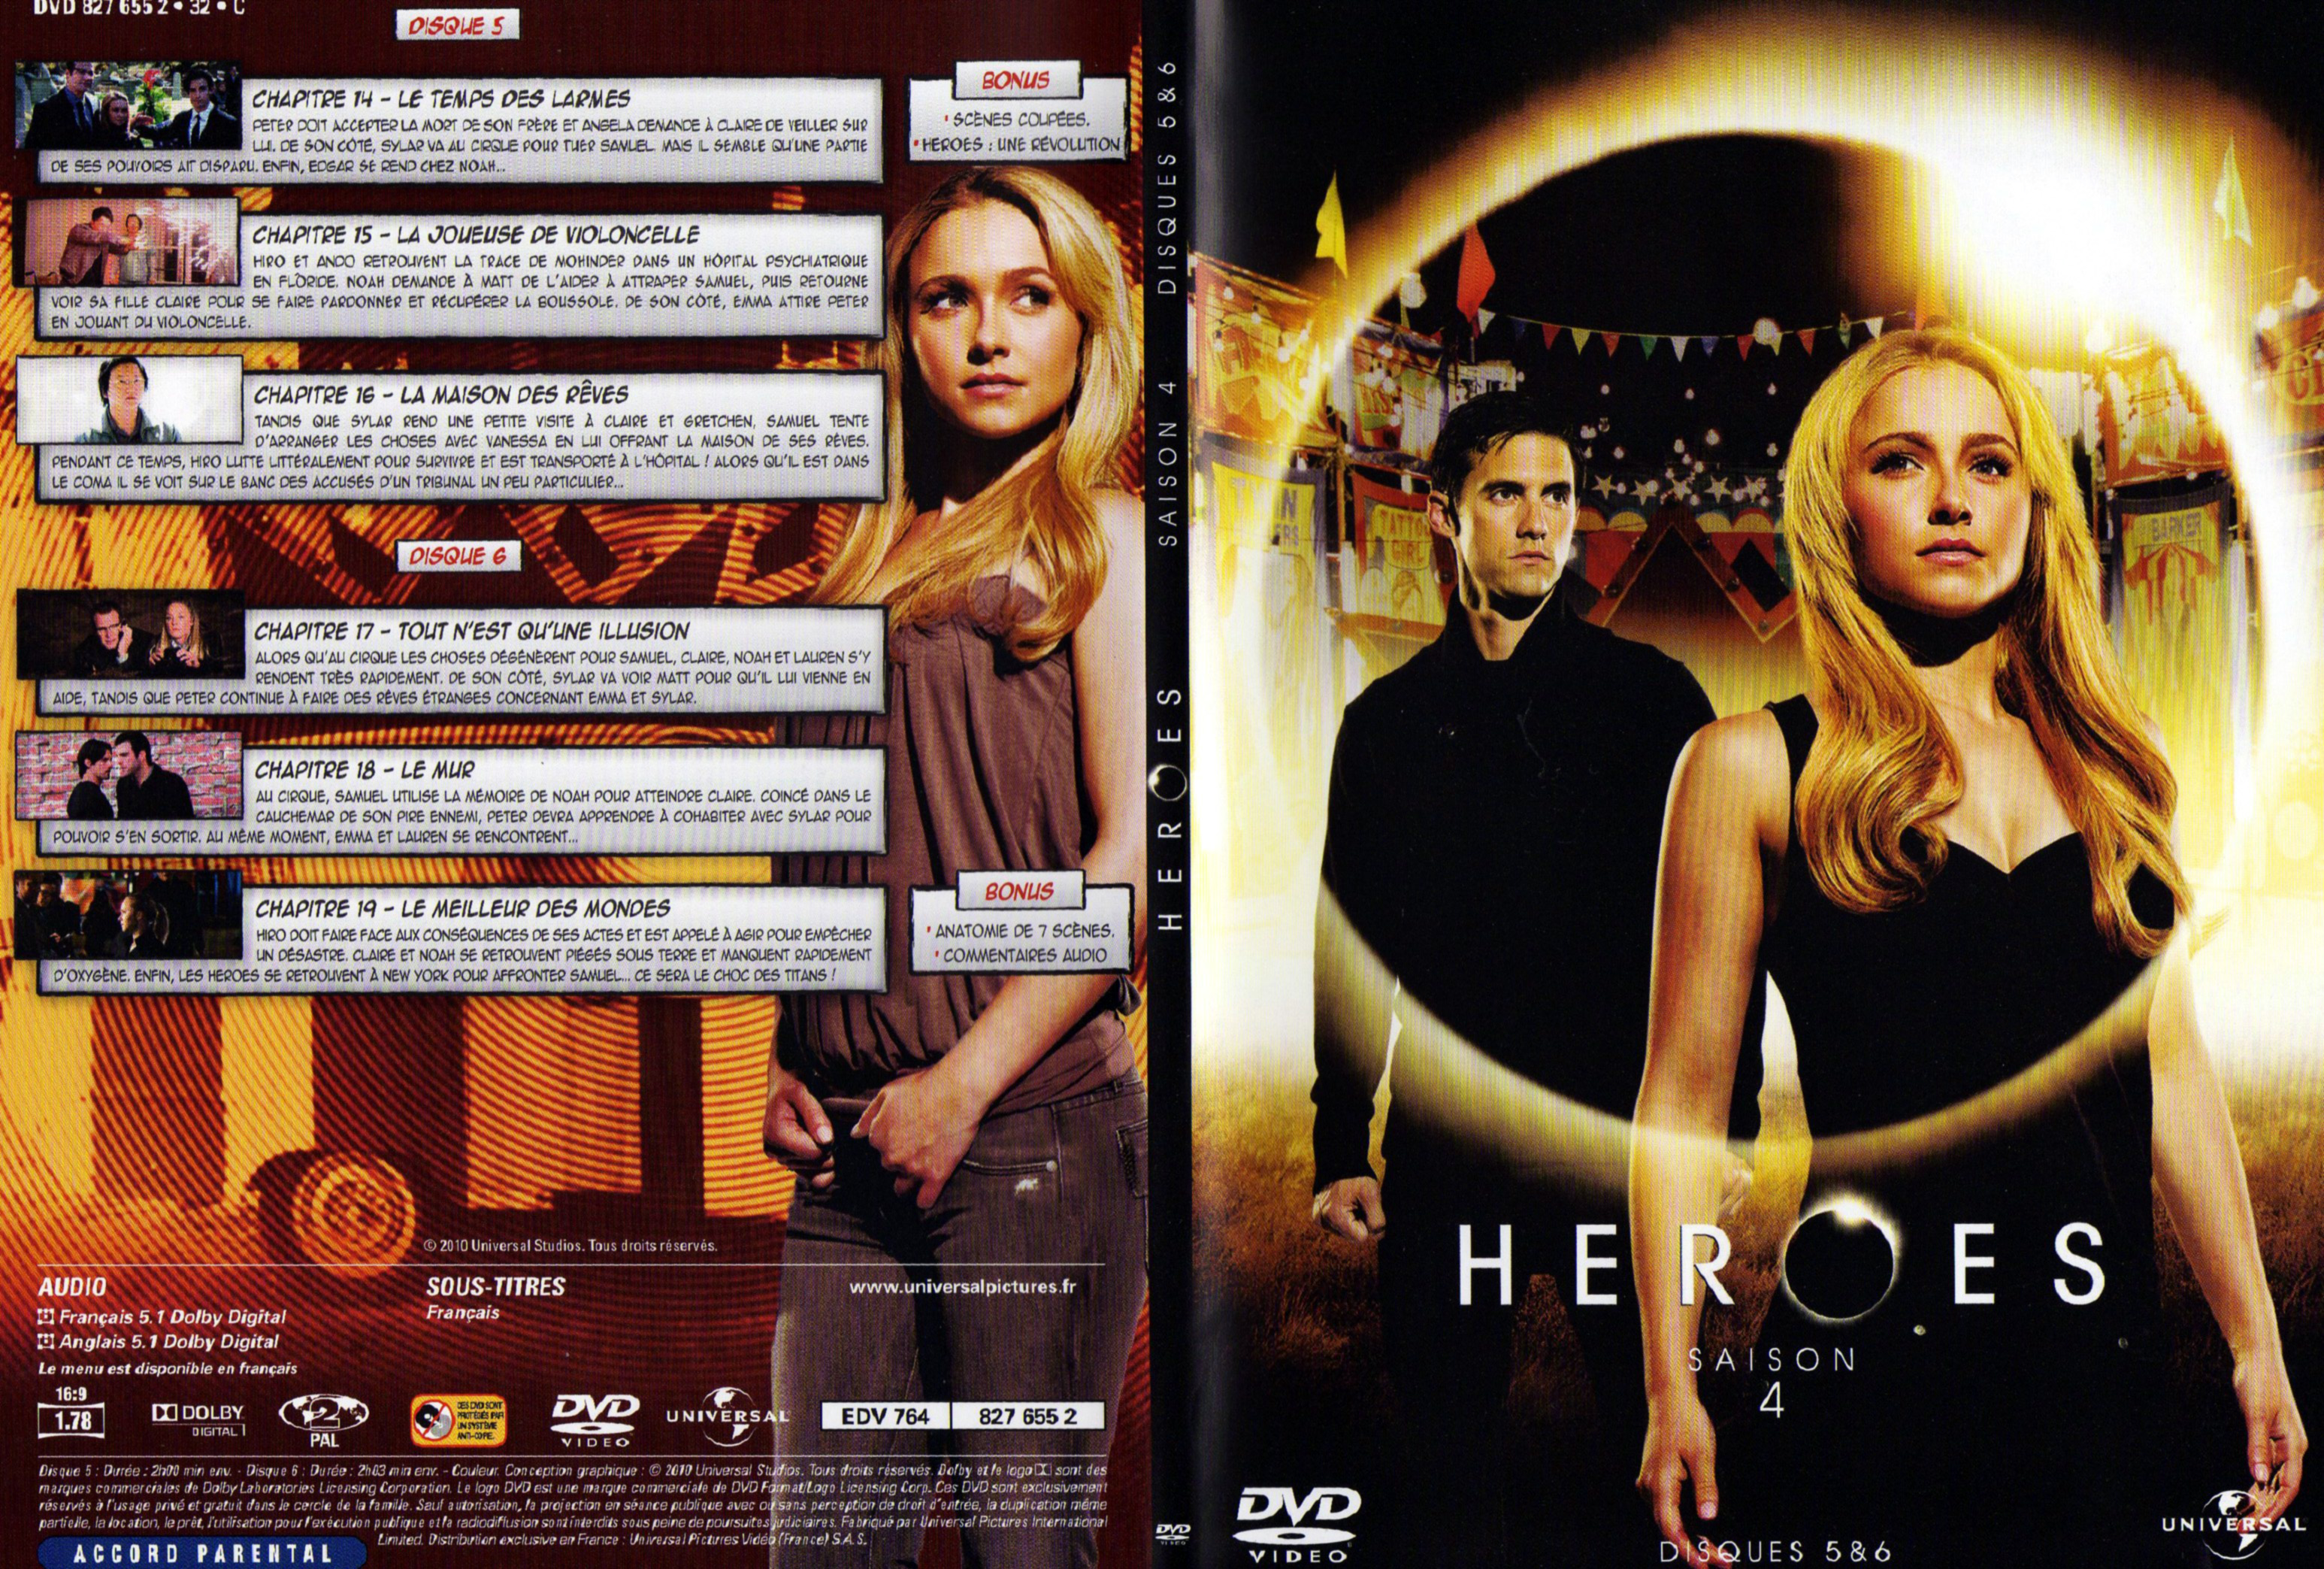 Jaquette DVD Heroes Saison 4 DVD 3